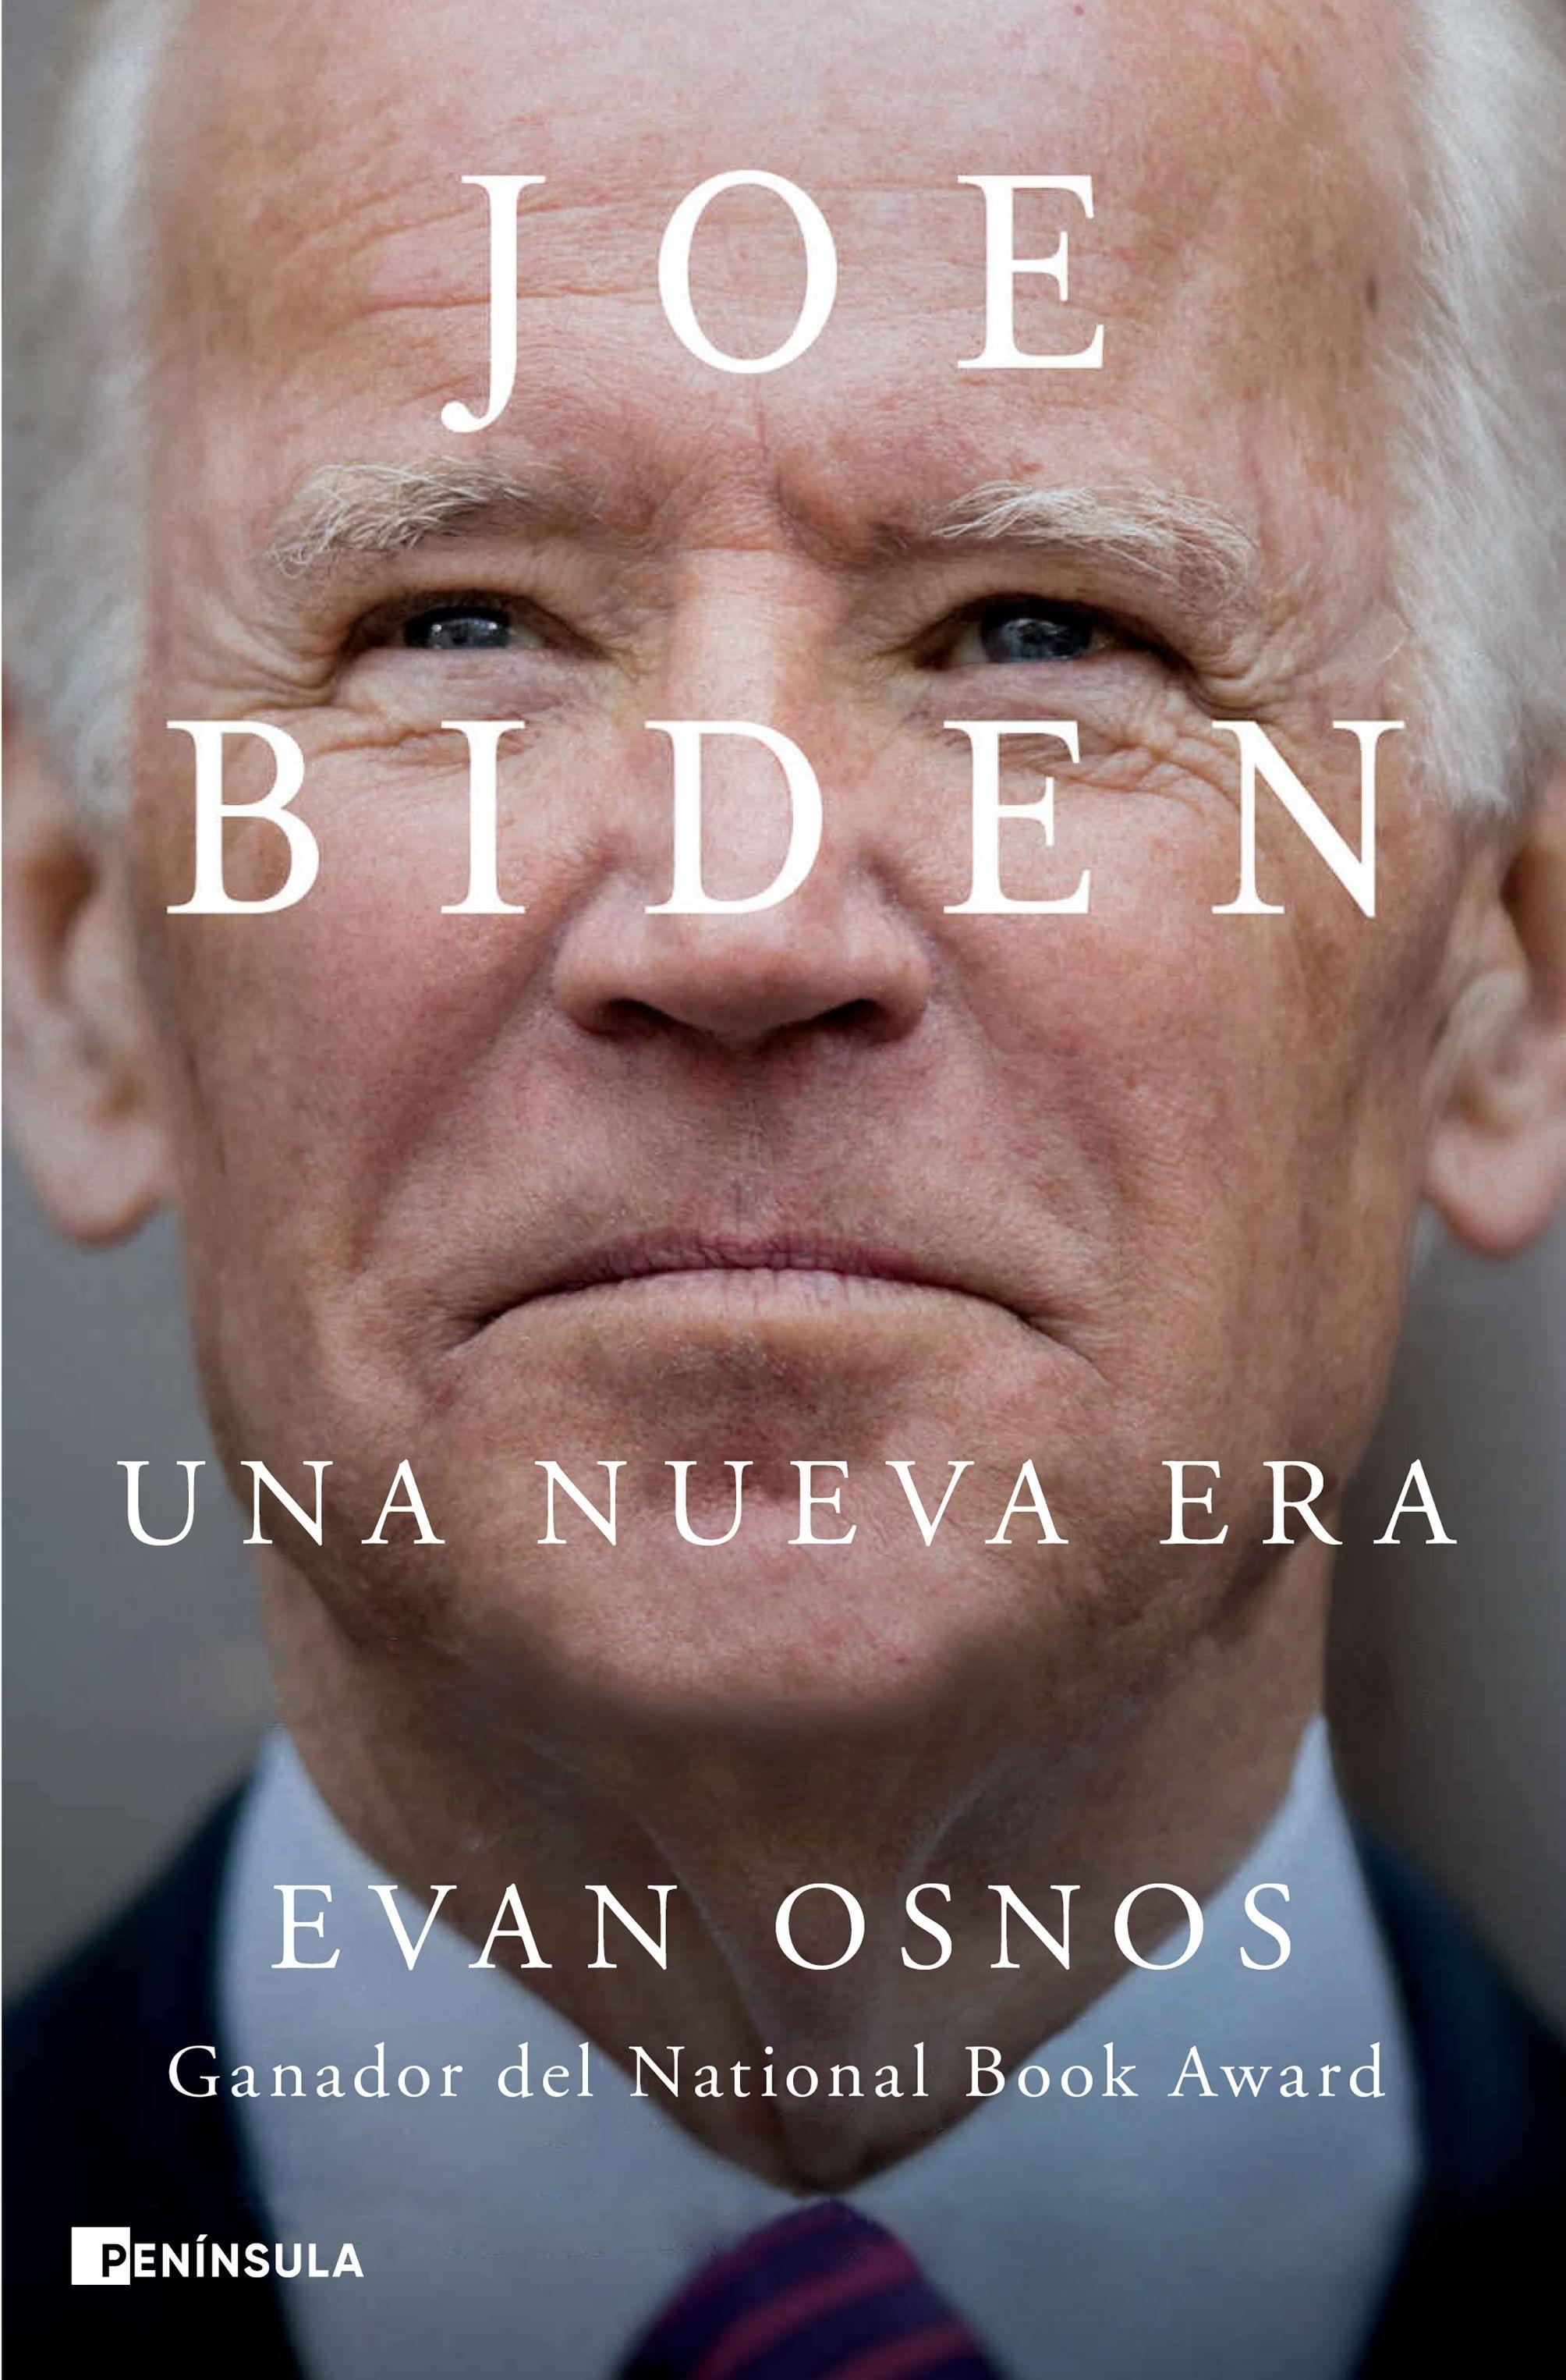 Joe Biden "Una nueva era". 